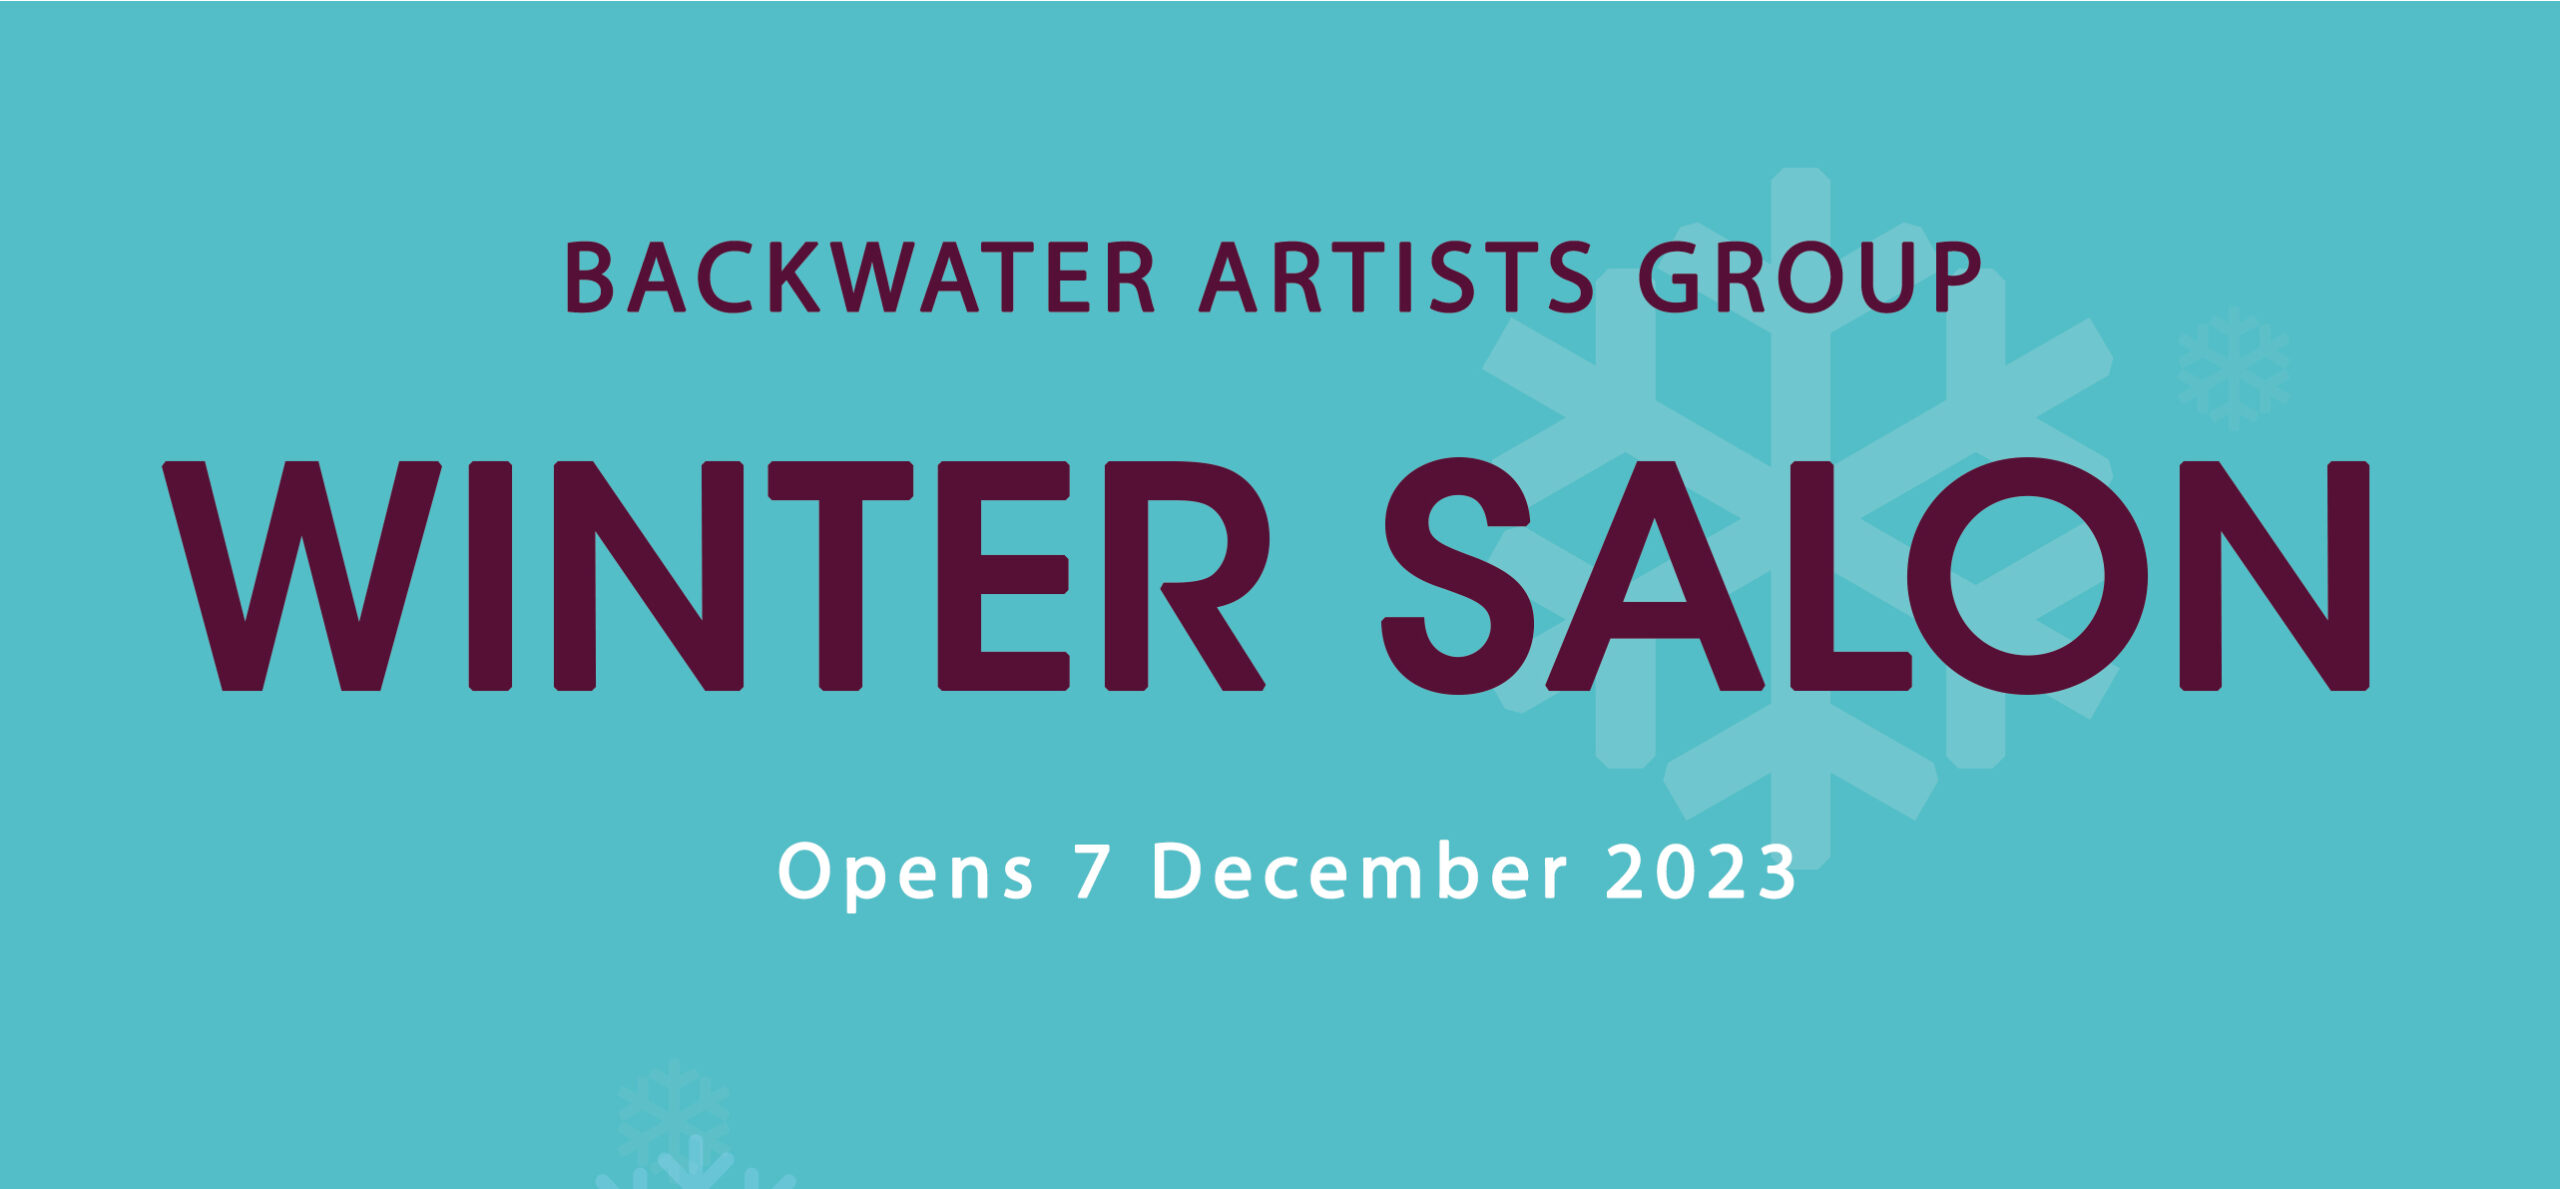 Winter Salon 2023 - 7 December 